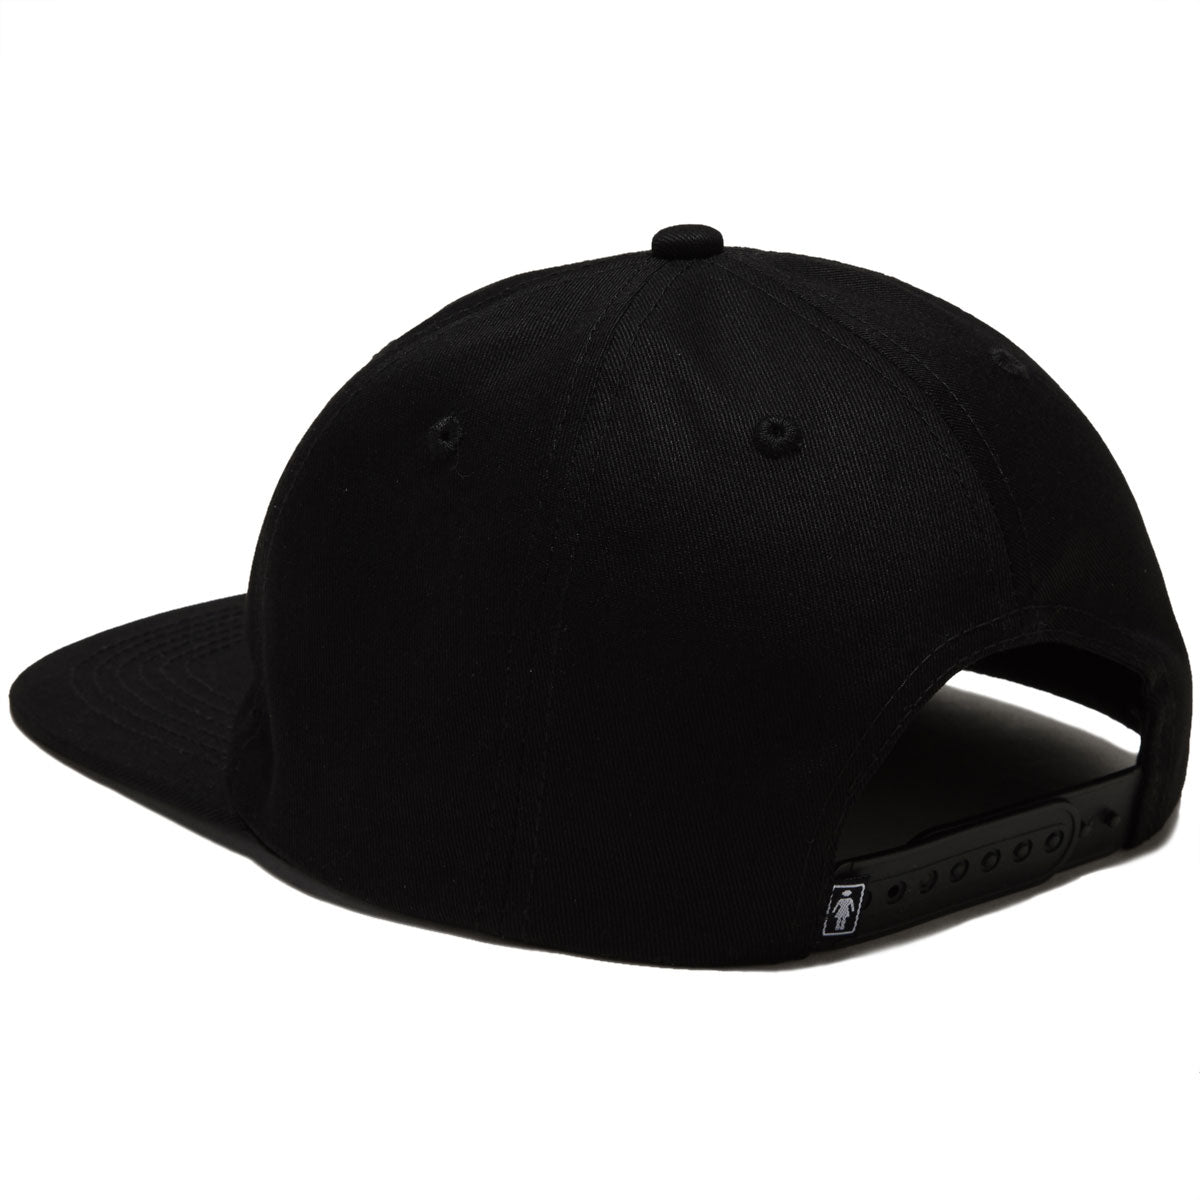 Girl Serif Snapback Hat - Black image 2